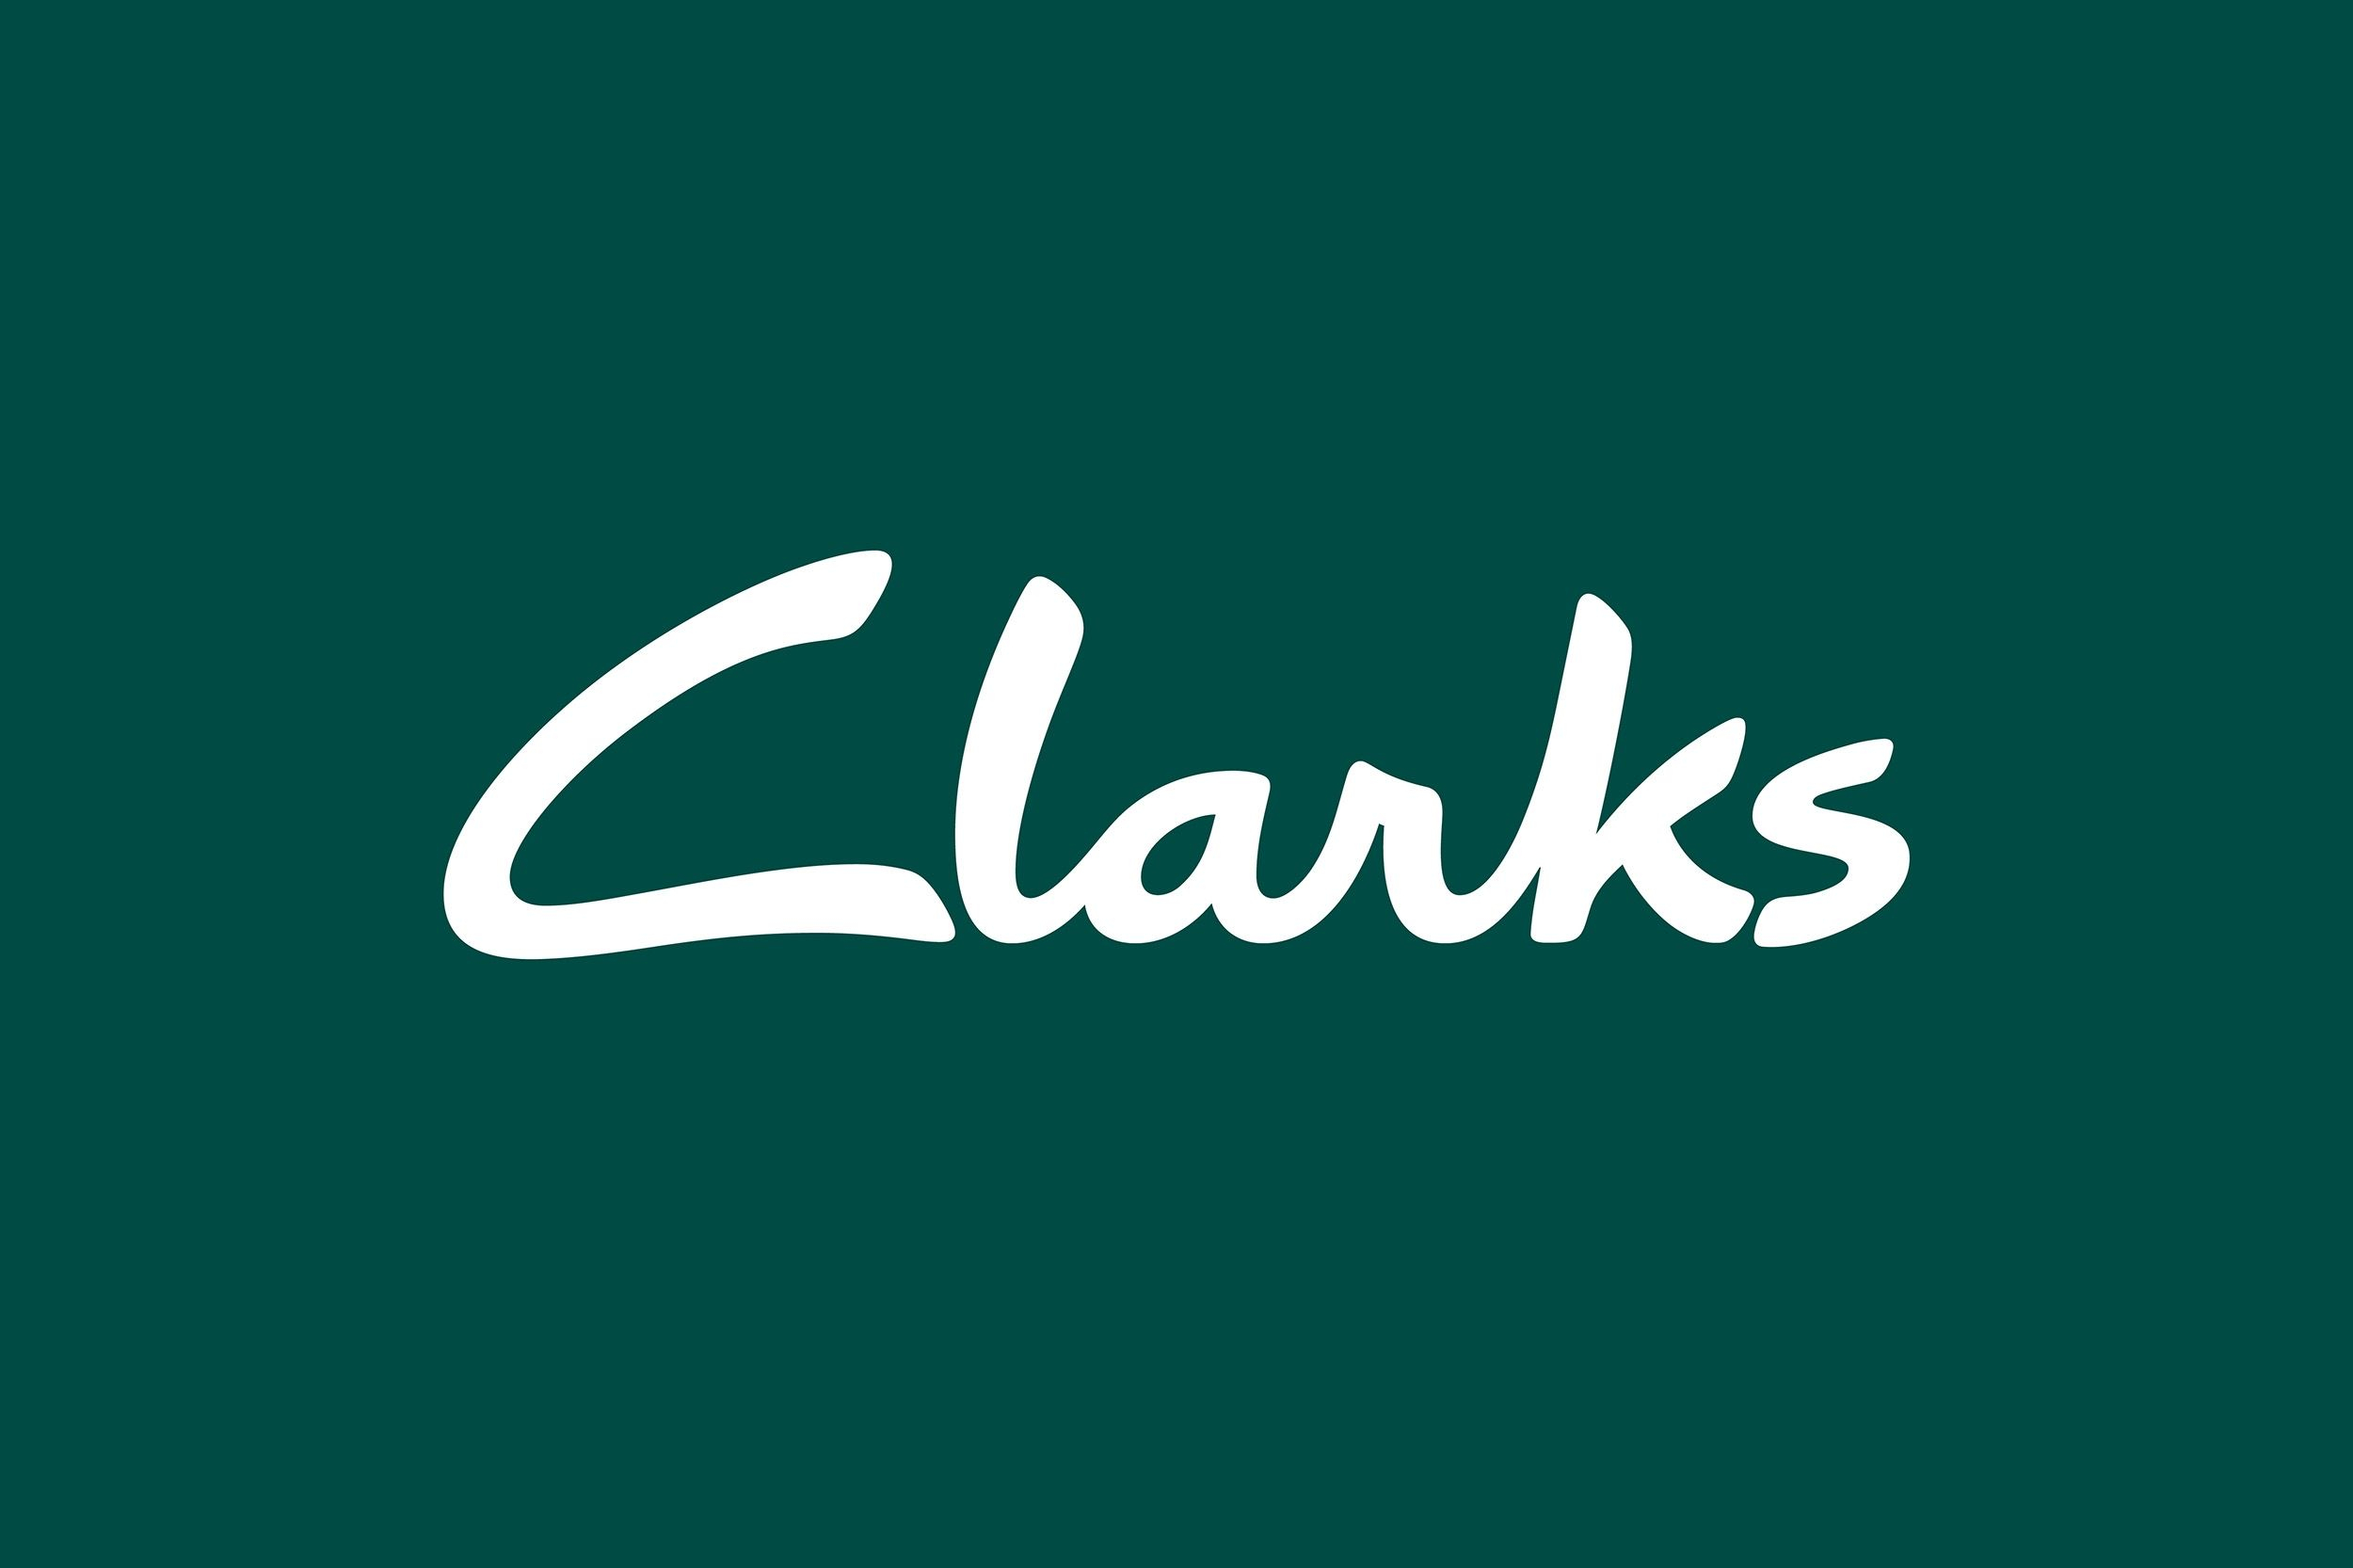 clarks offer codes 2019